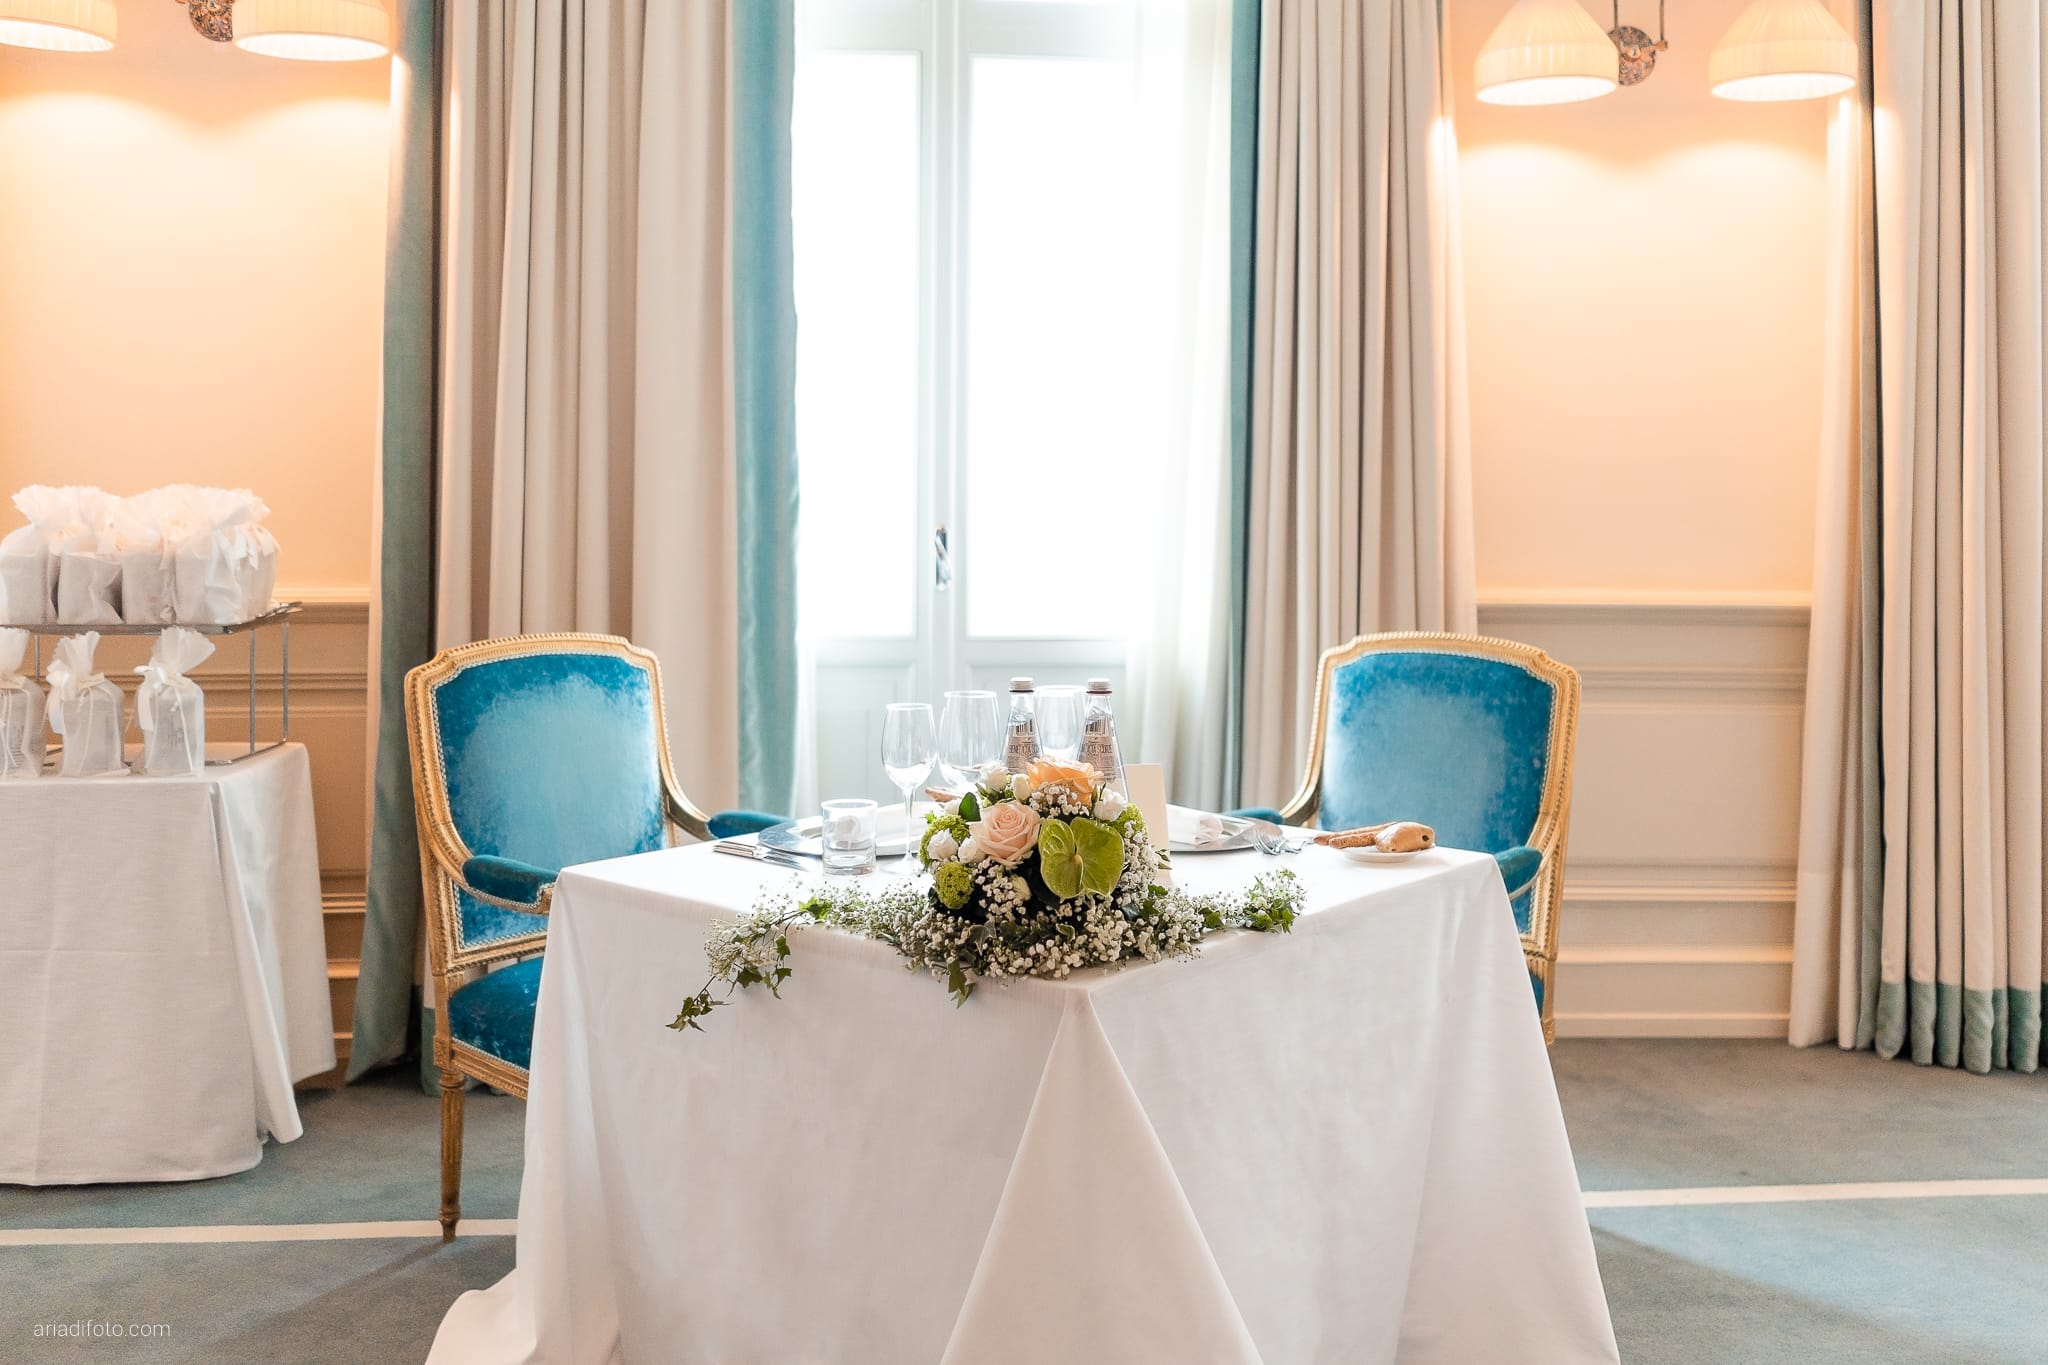 Elena Guido Matrimonio elegante Savoia Excelsior Palace Trieste ricevimento sala tavolo sposi